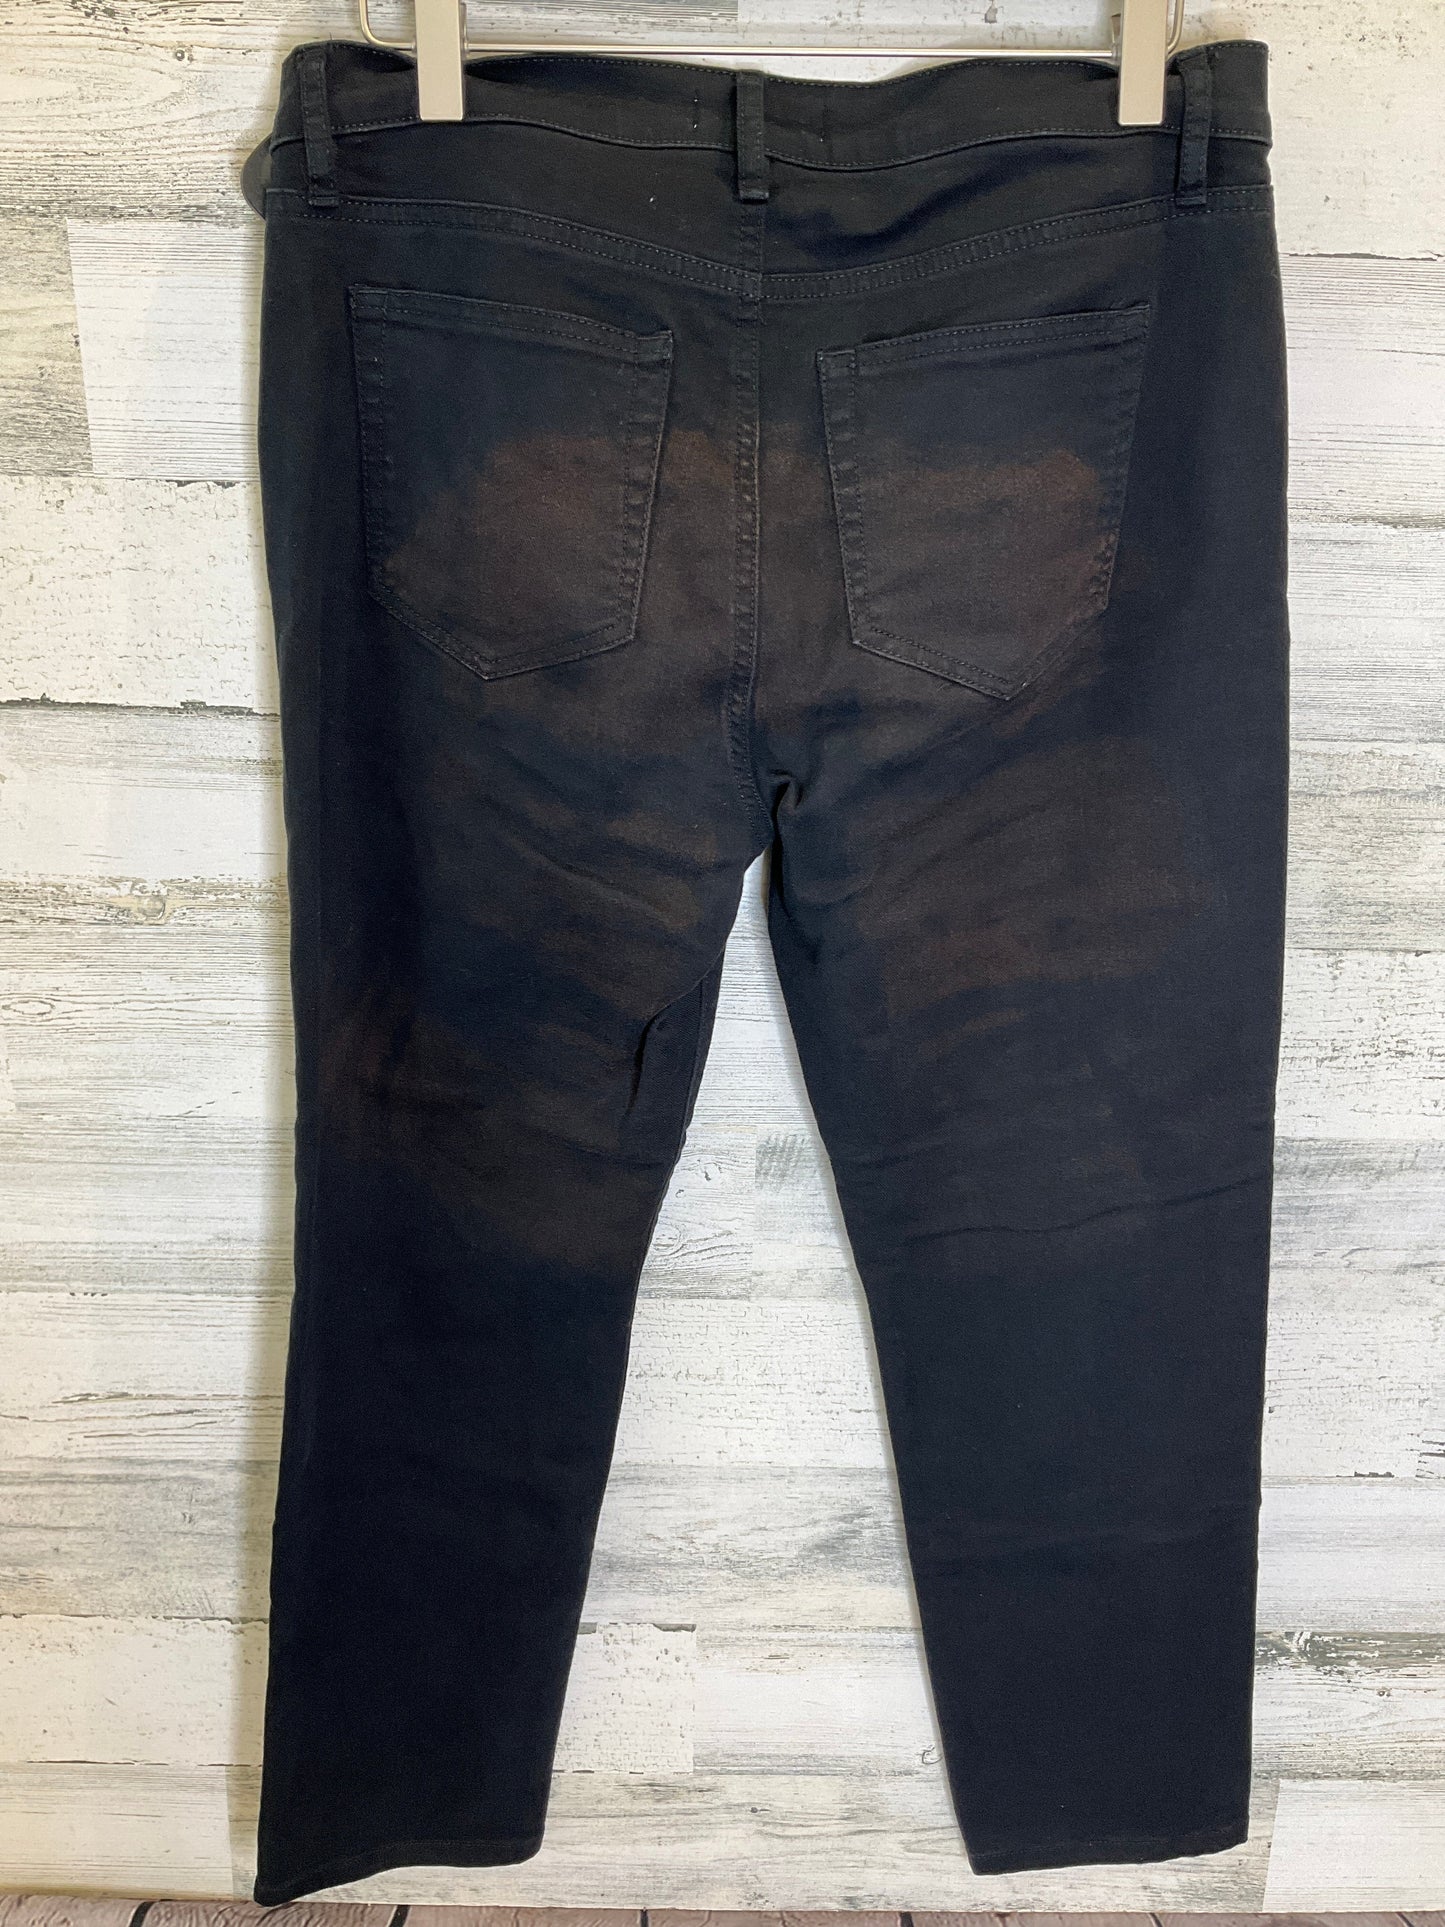 Black Jeans Straight Loft, Size 8